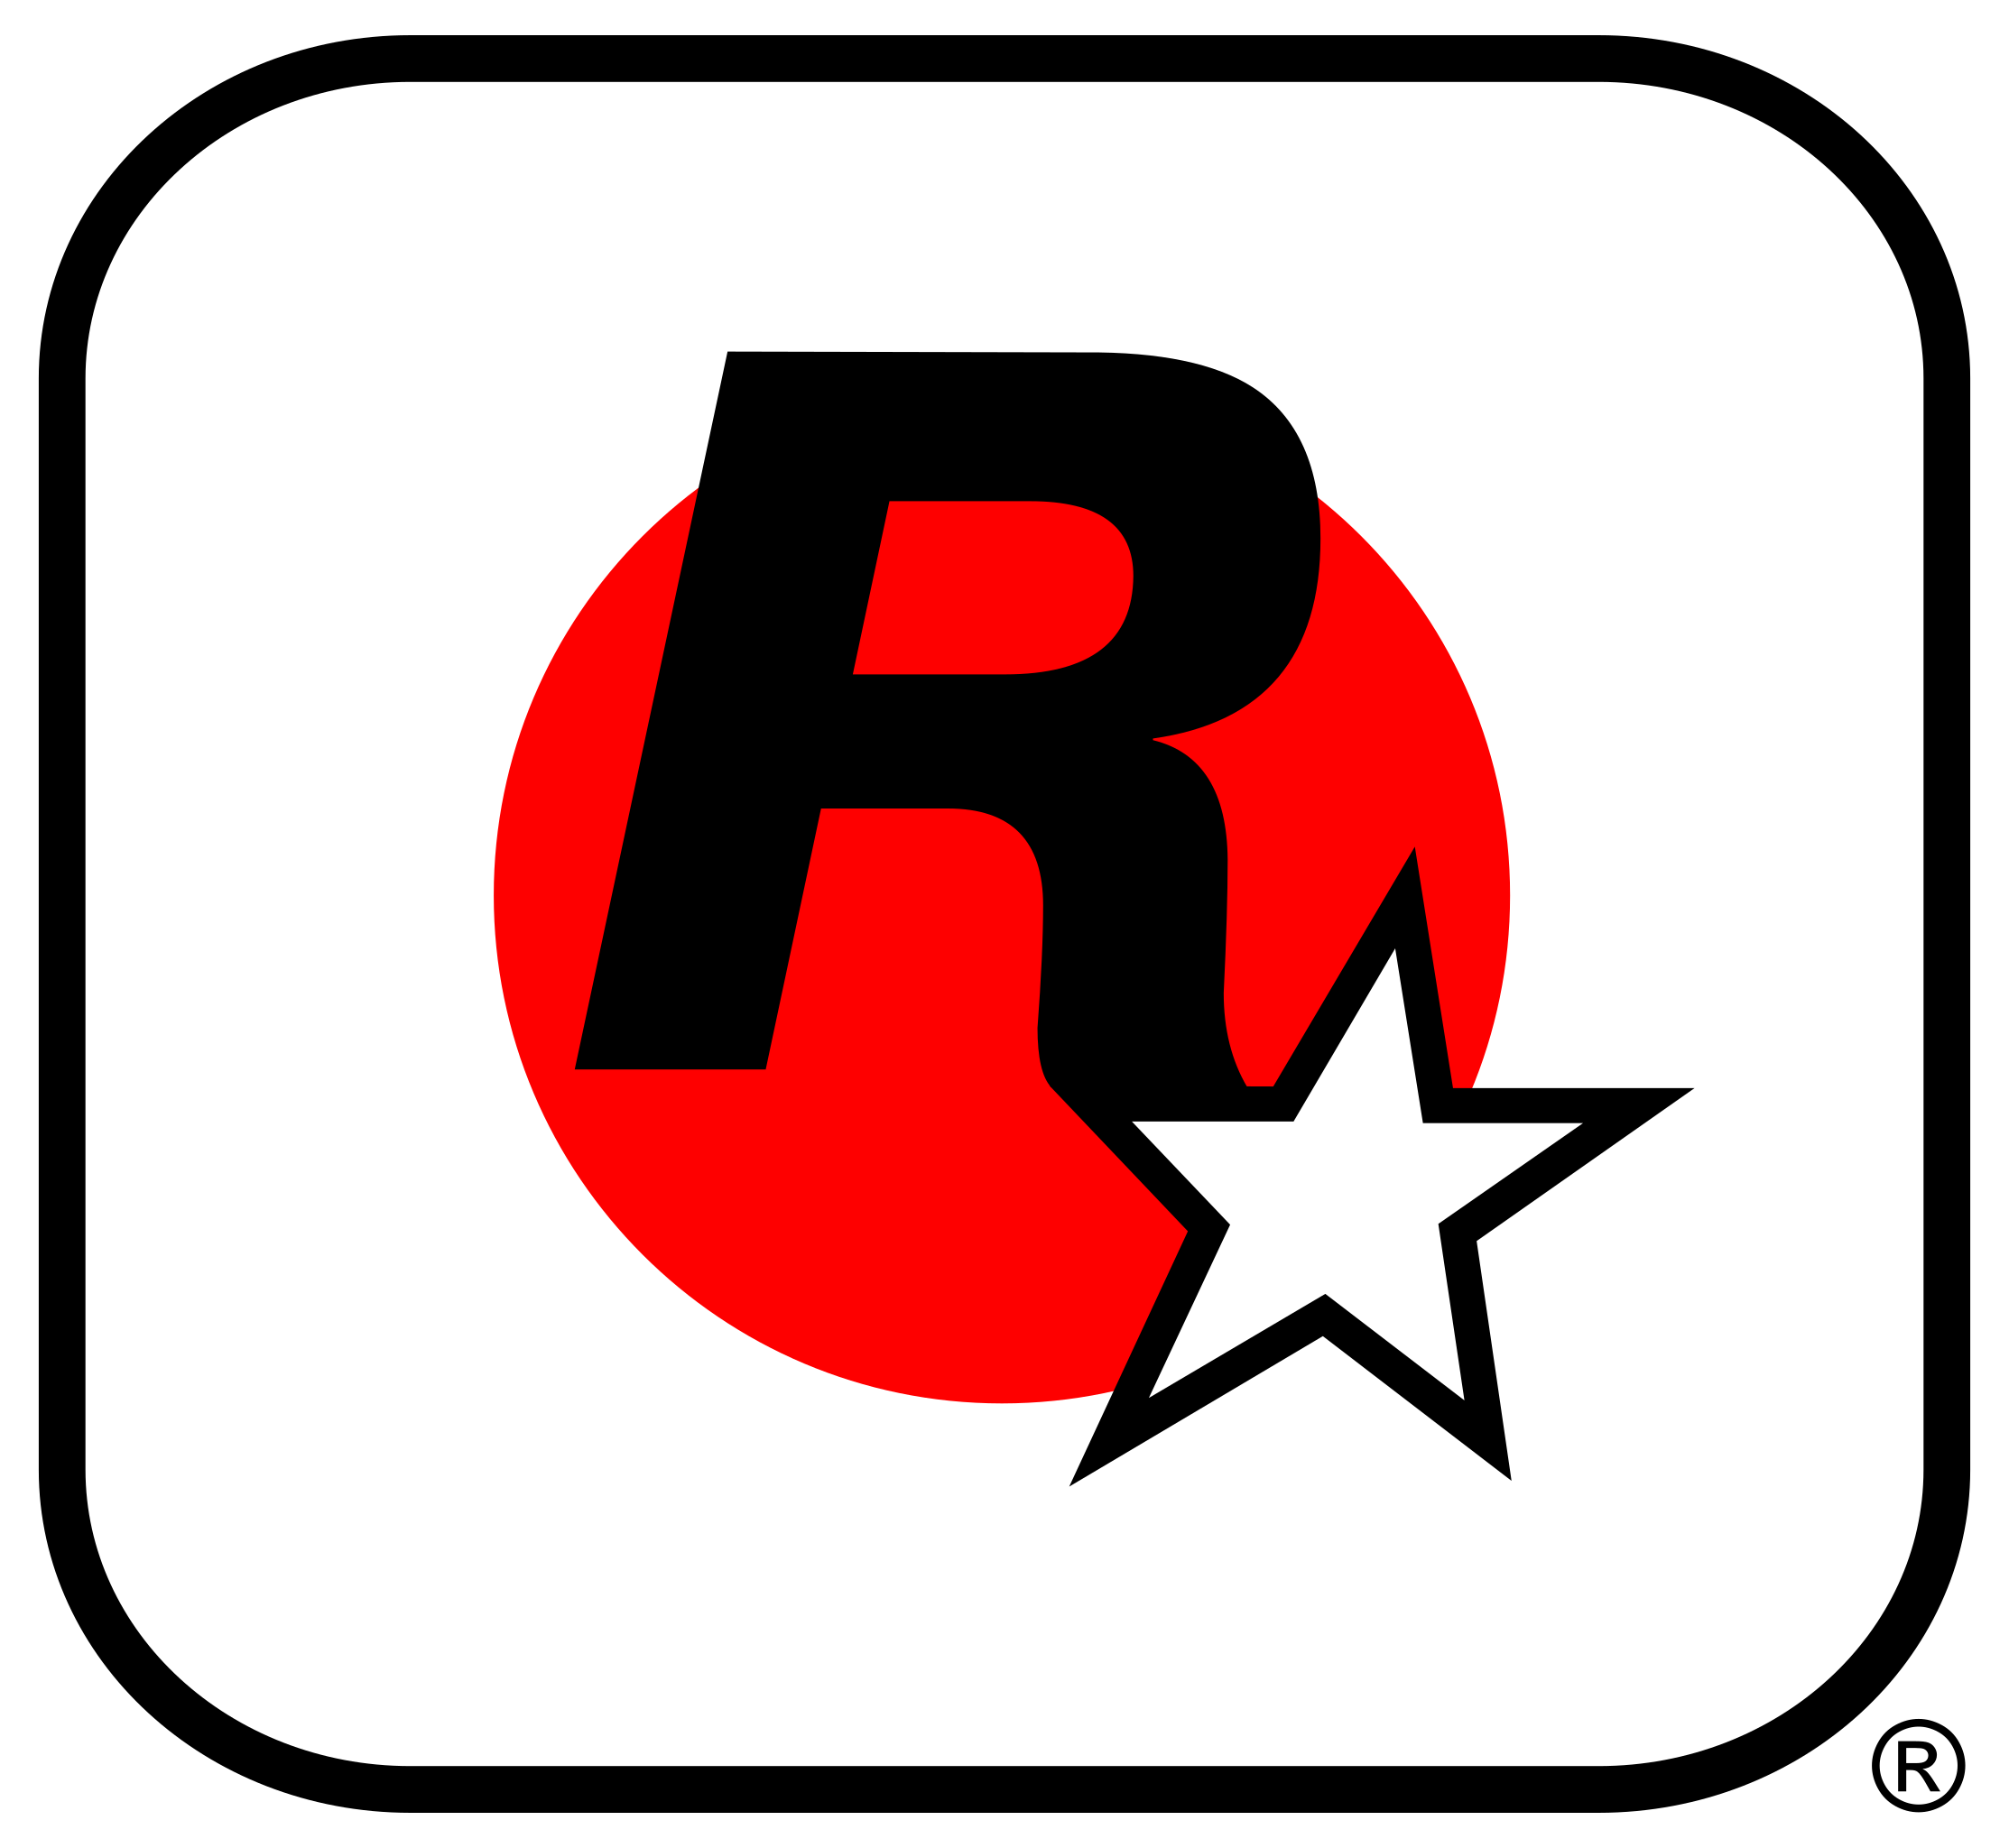 Rockstar games файлы. Рокстар. Логотип рокстар. Логотипы компьютерных игр. Рокстар геймс игры.